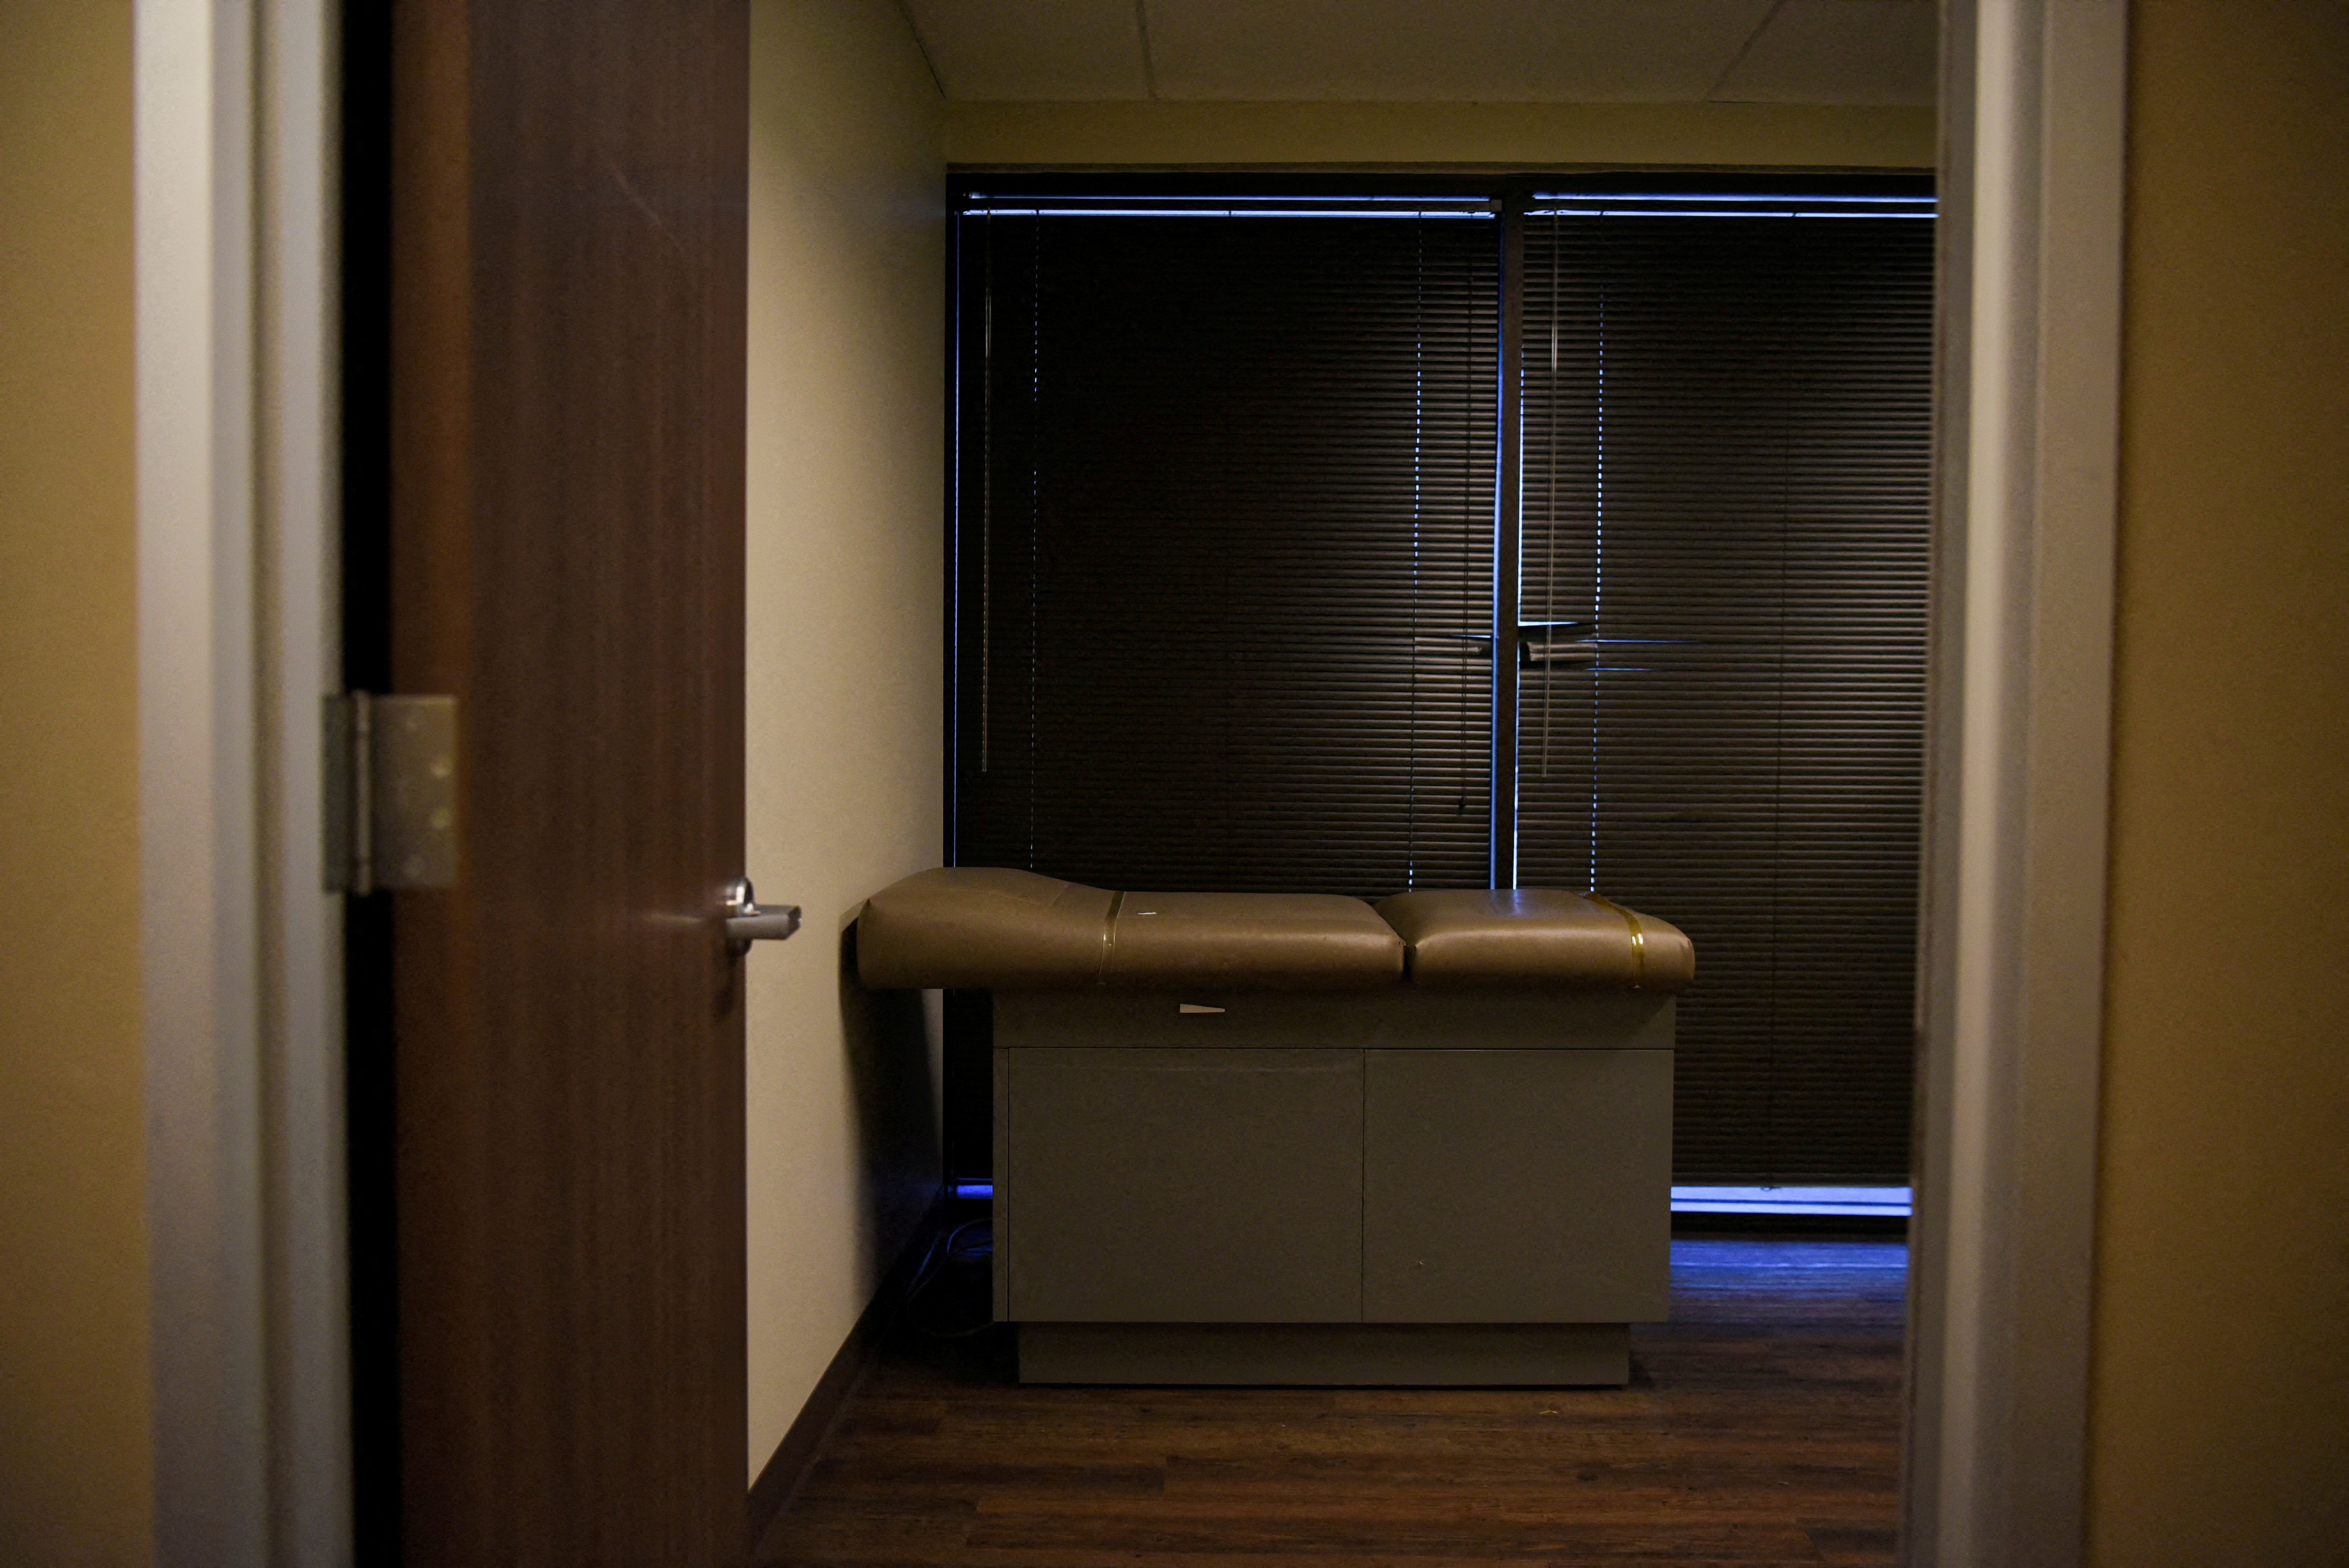 A closed abortion clinic in San Antonio